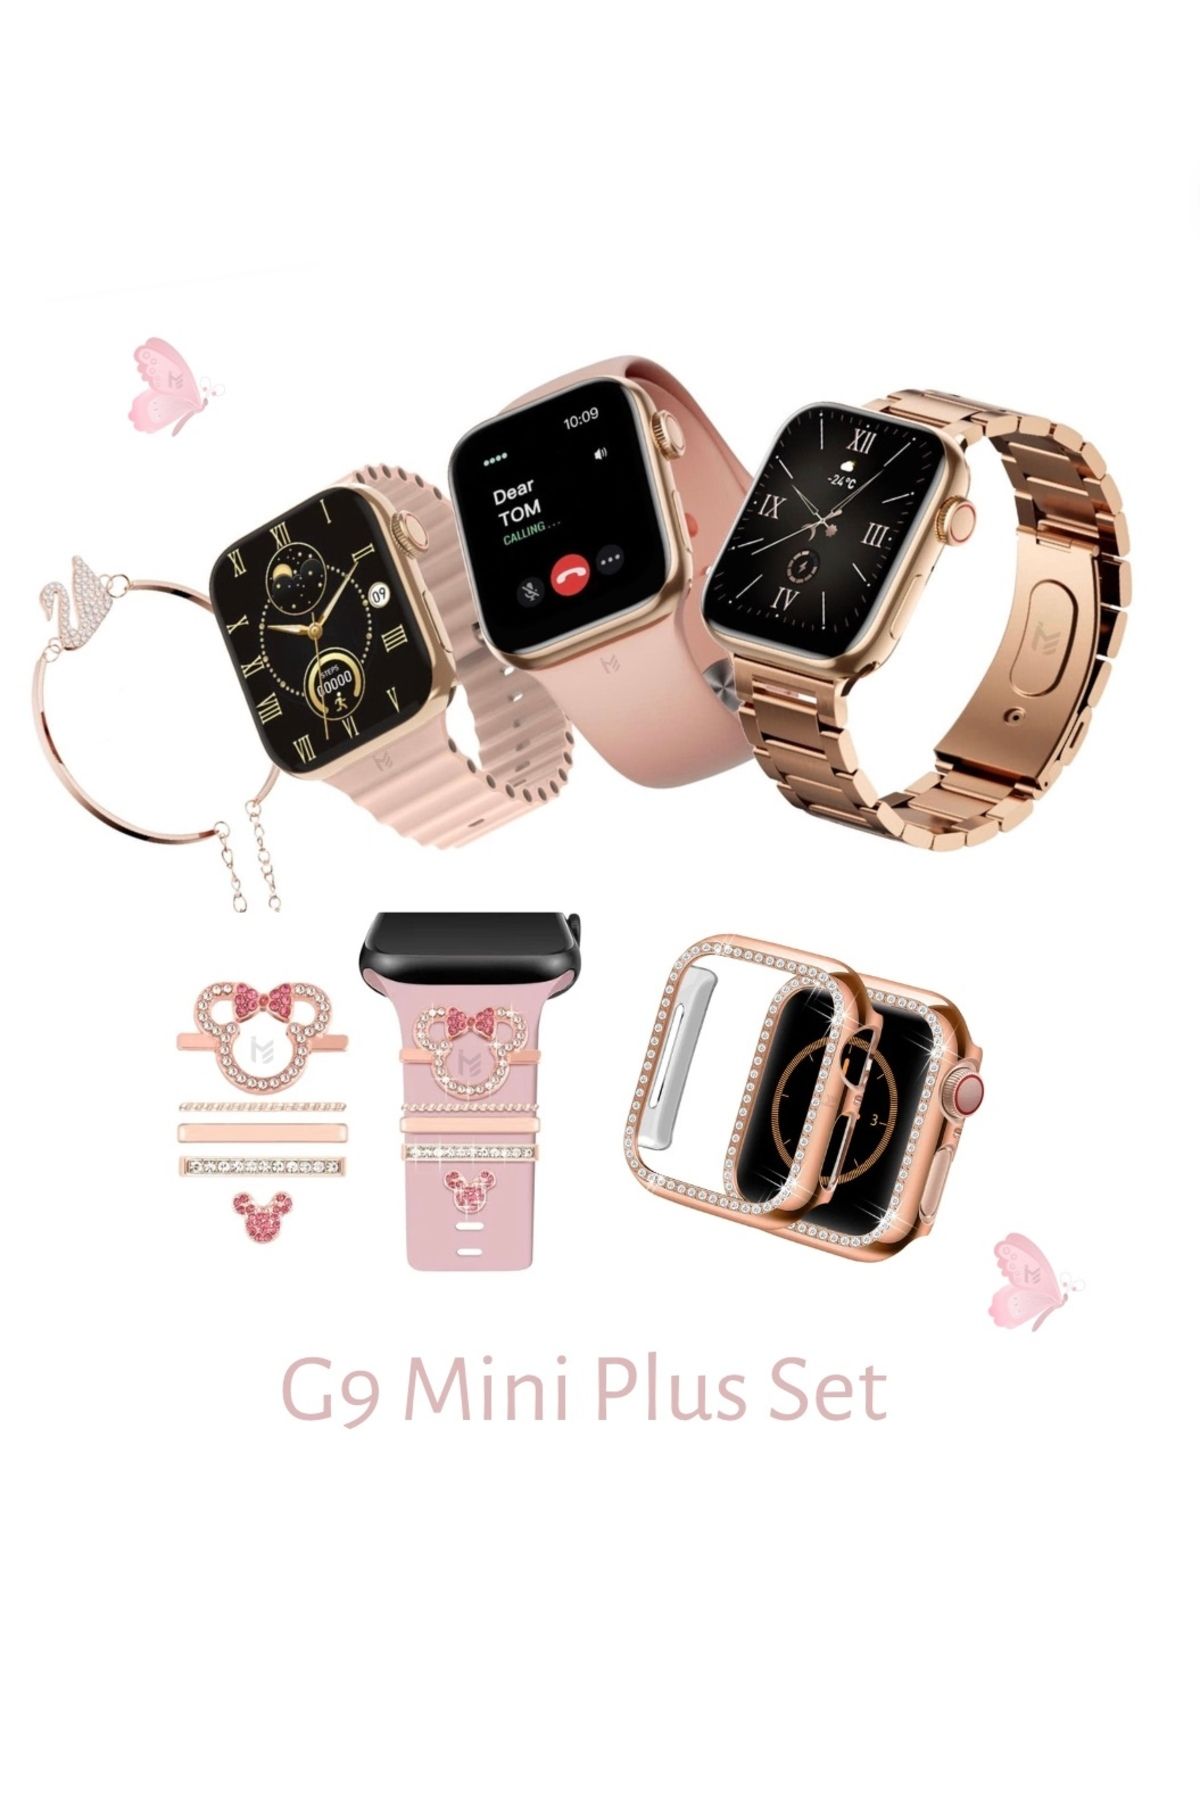 İMEXTECH G9 Mini Plus Rose  Gold Takım Set Smart Watch 3Kordon 4Charm Süs 1Bileklik 1Watch Kılıf